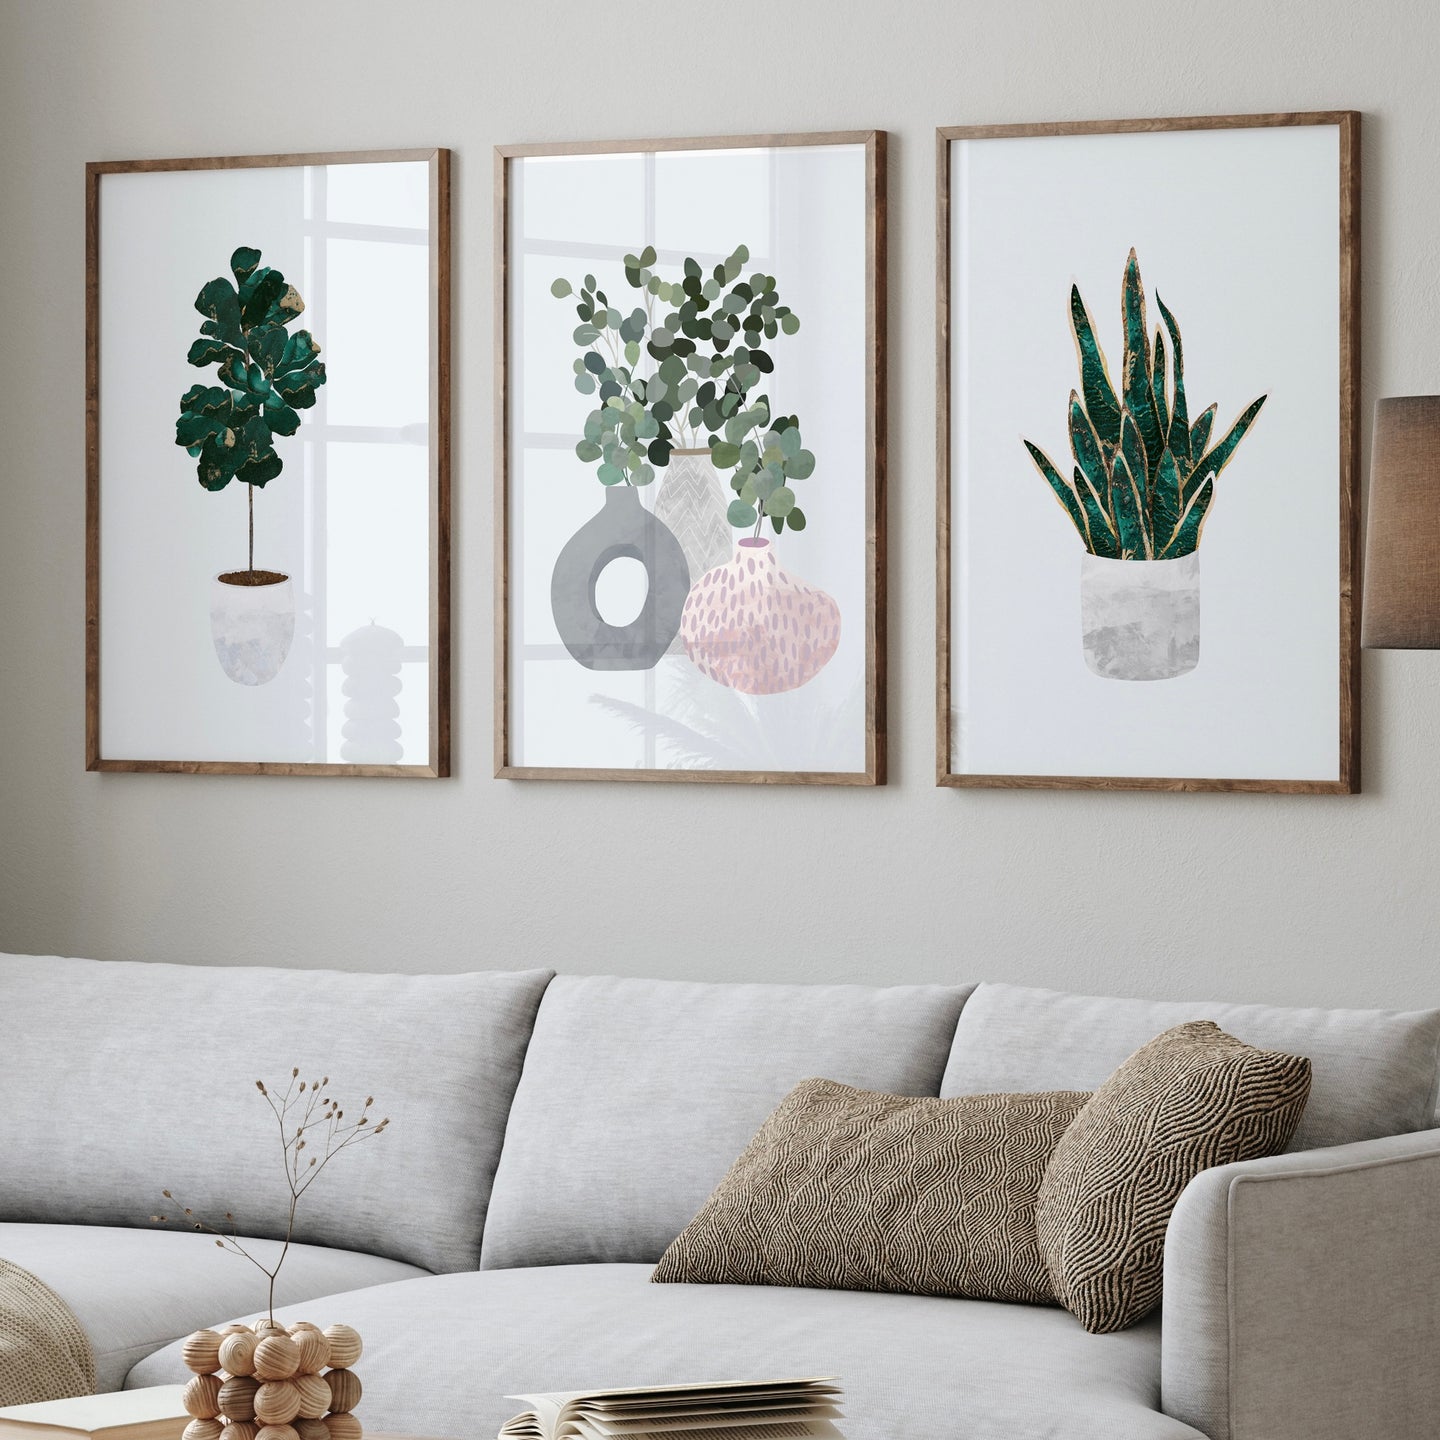 Botanical Plants from Sarah Manovski | Gallery Wall Set of 3 Prints